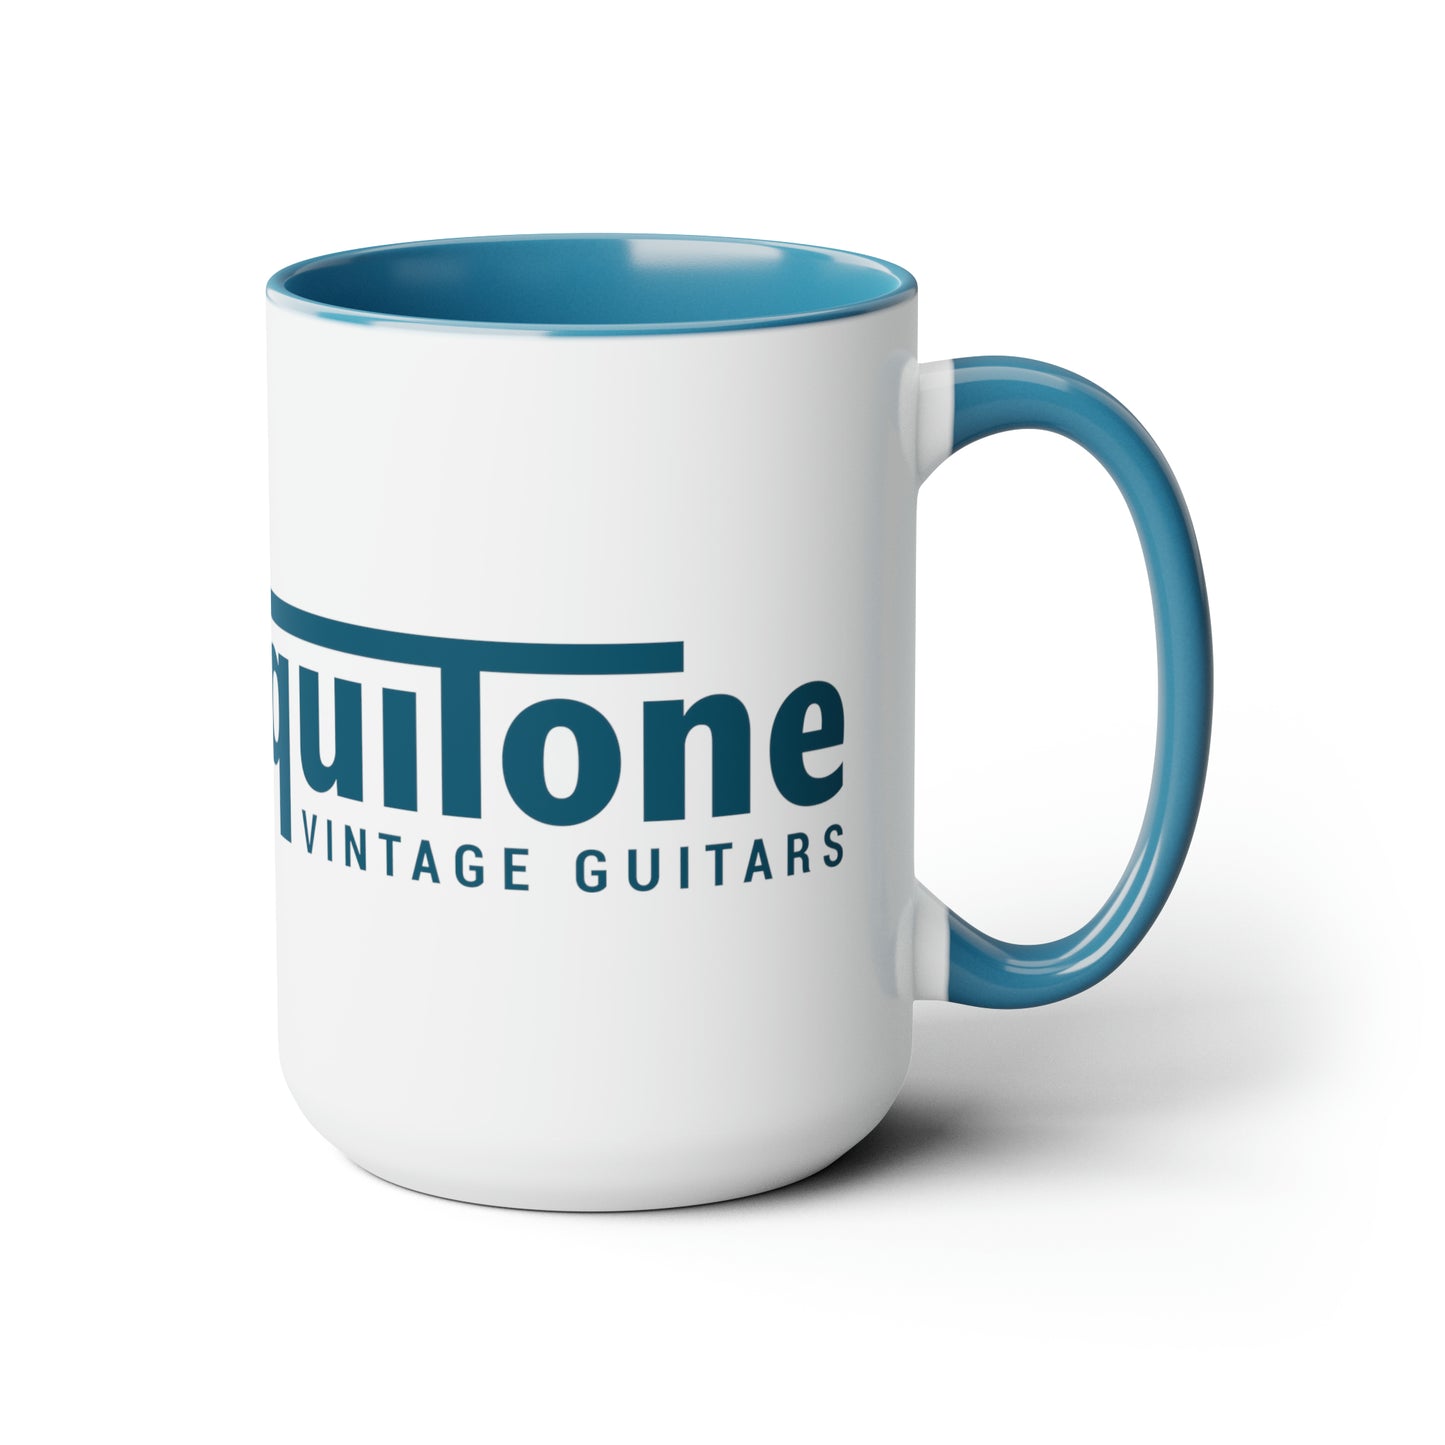 AntiquiTone Vintage Guitars 15oz Coffee Mugs